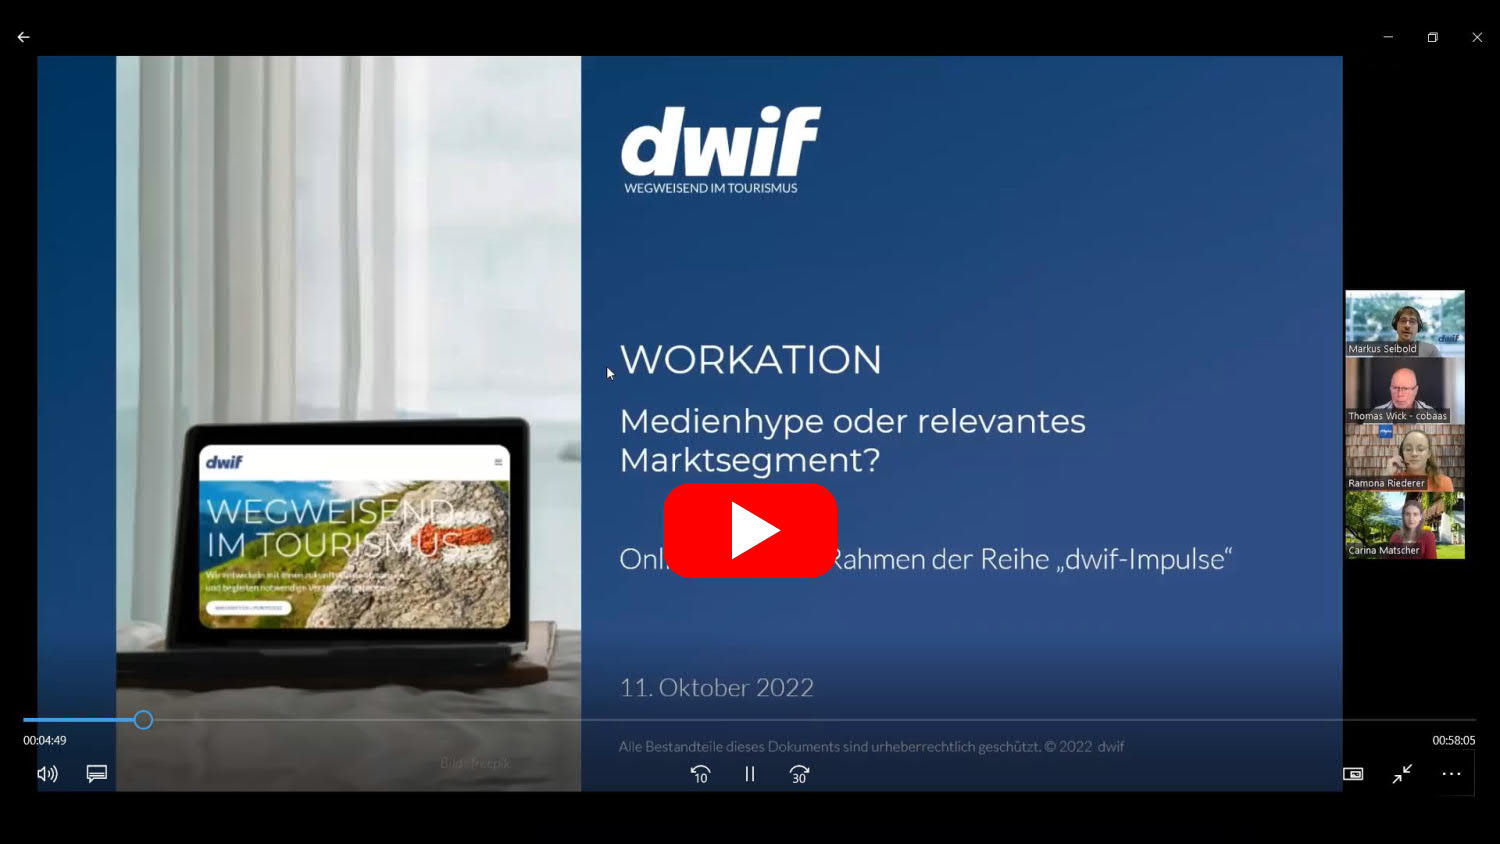 dwif-Impulse: Workation – Medienhype oder relevantes Marktsegment